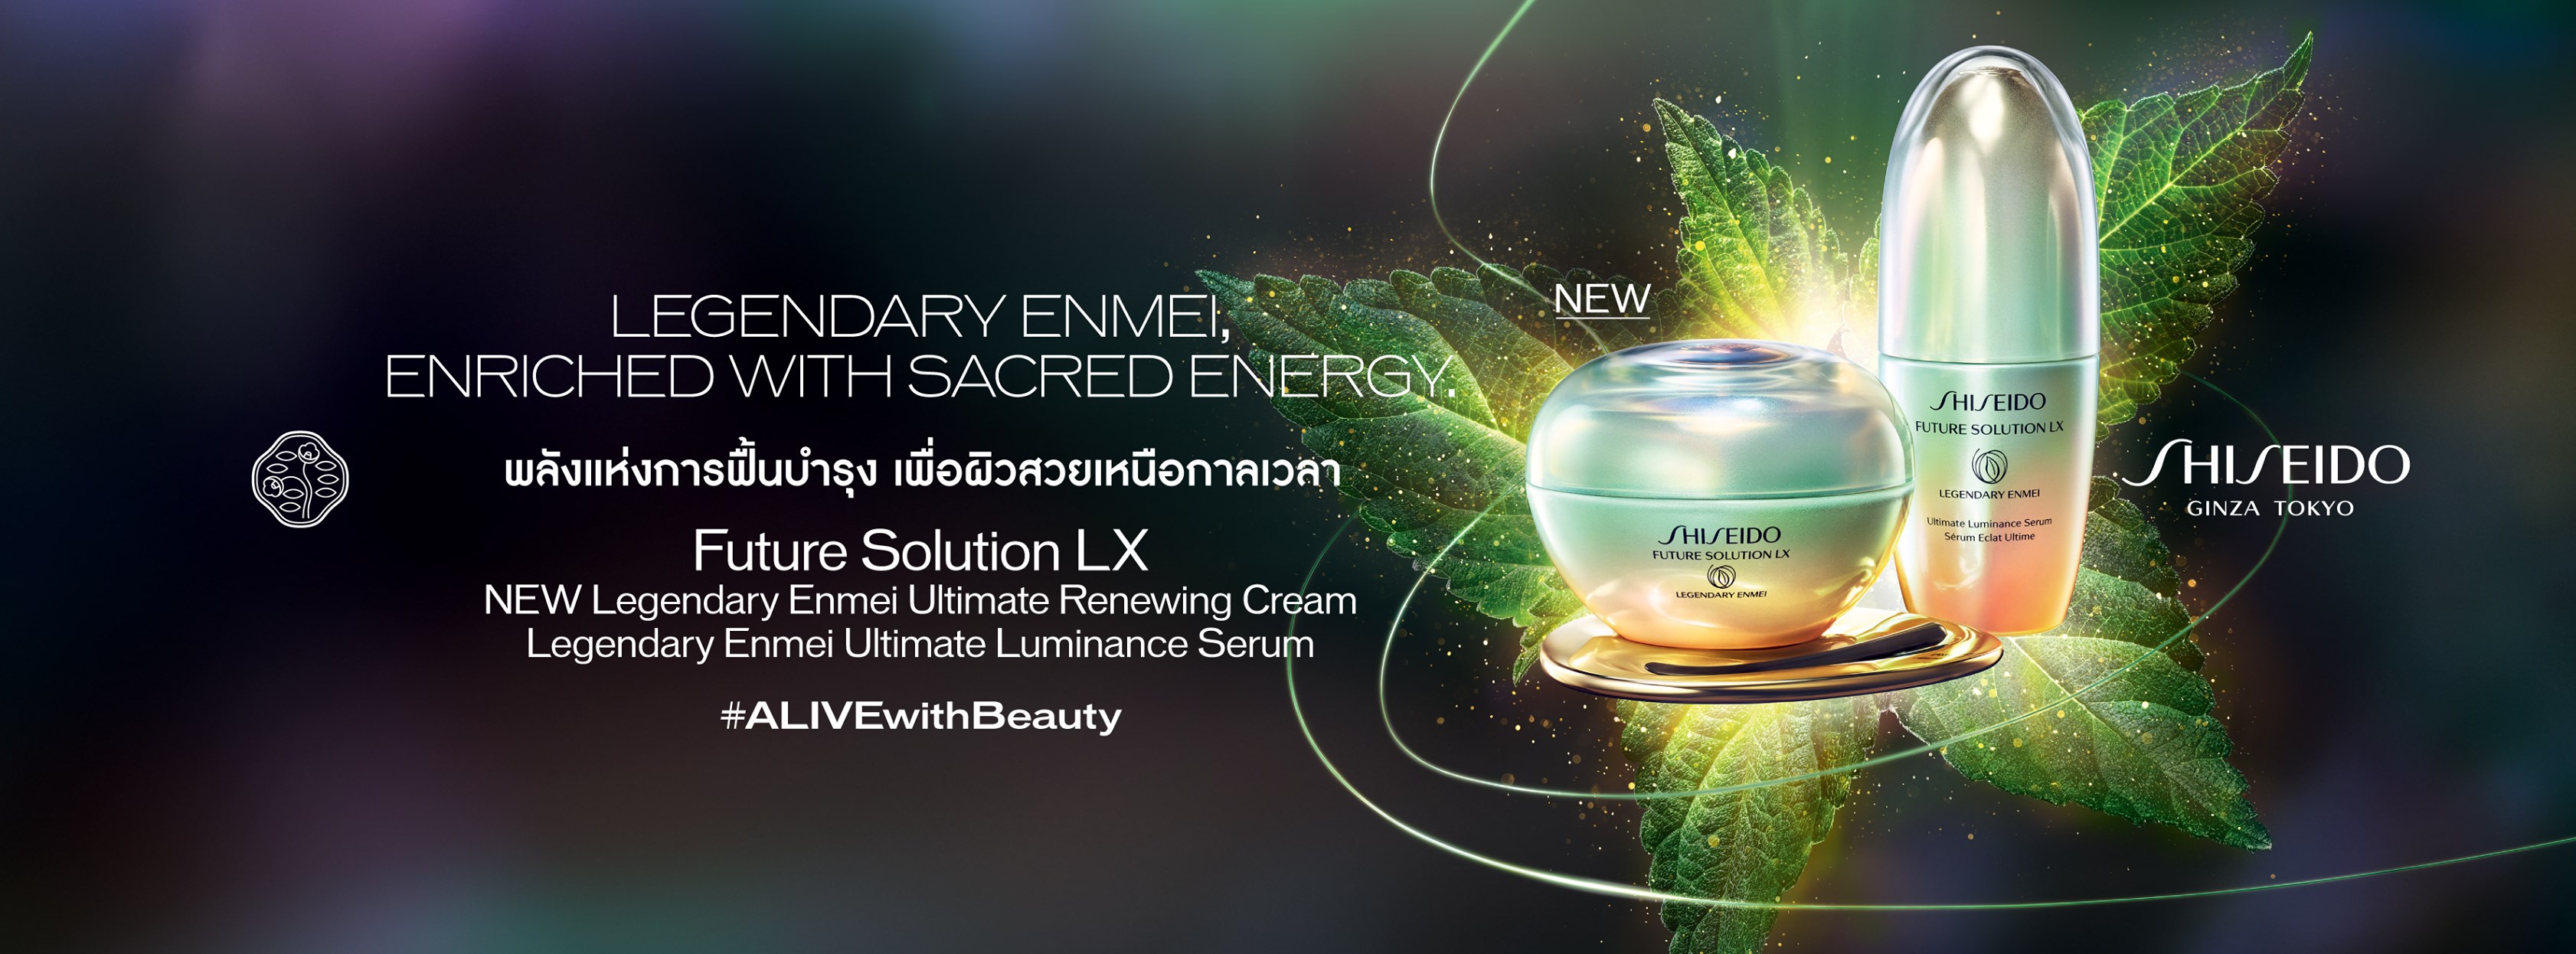 Shiseido,future solution lx Legendary Enmei ultimate renewing cream,Shiseido future solution,ครีมบำรุงผิวหน้า